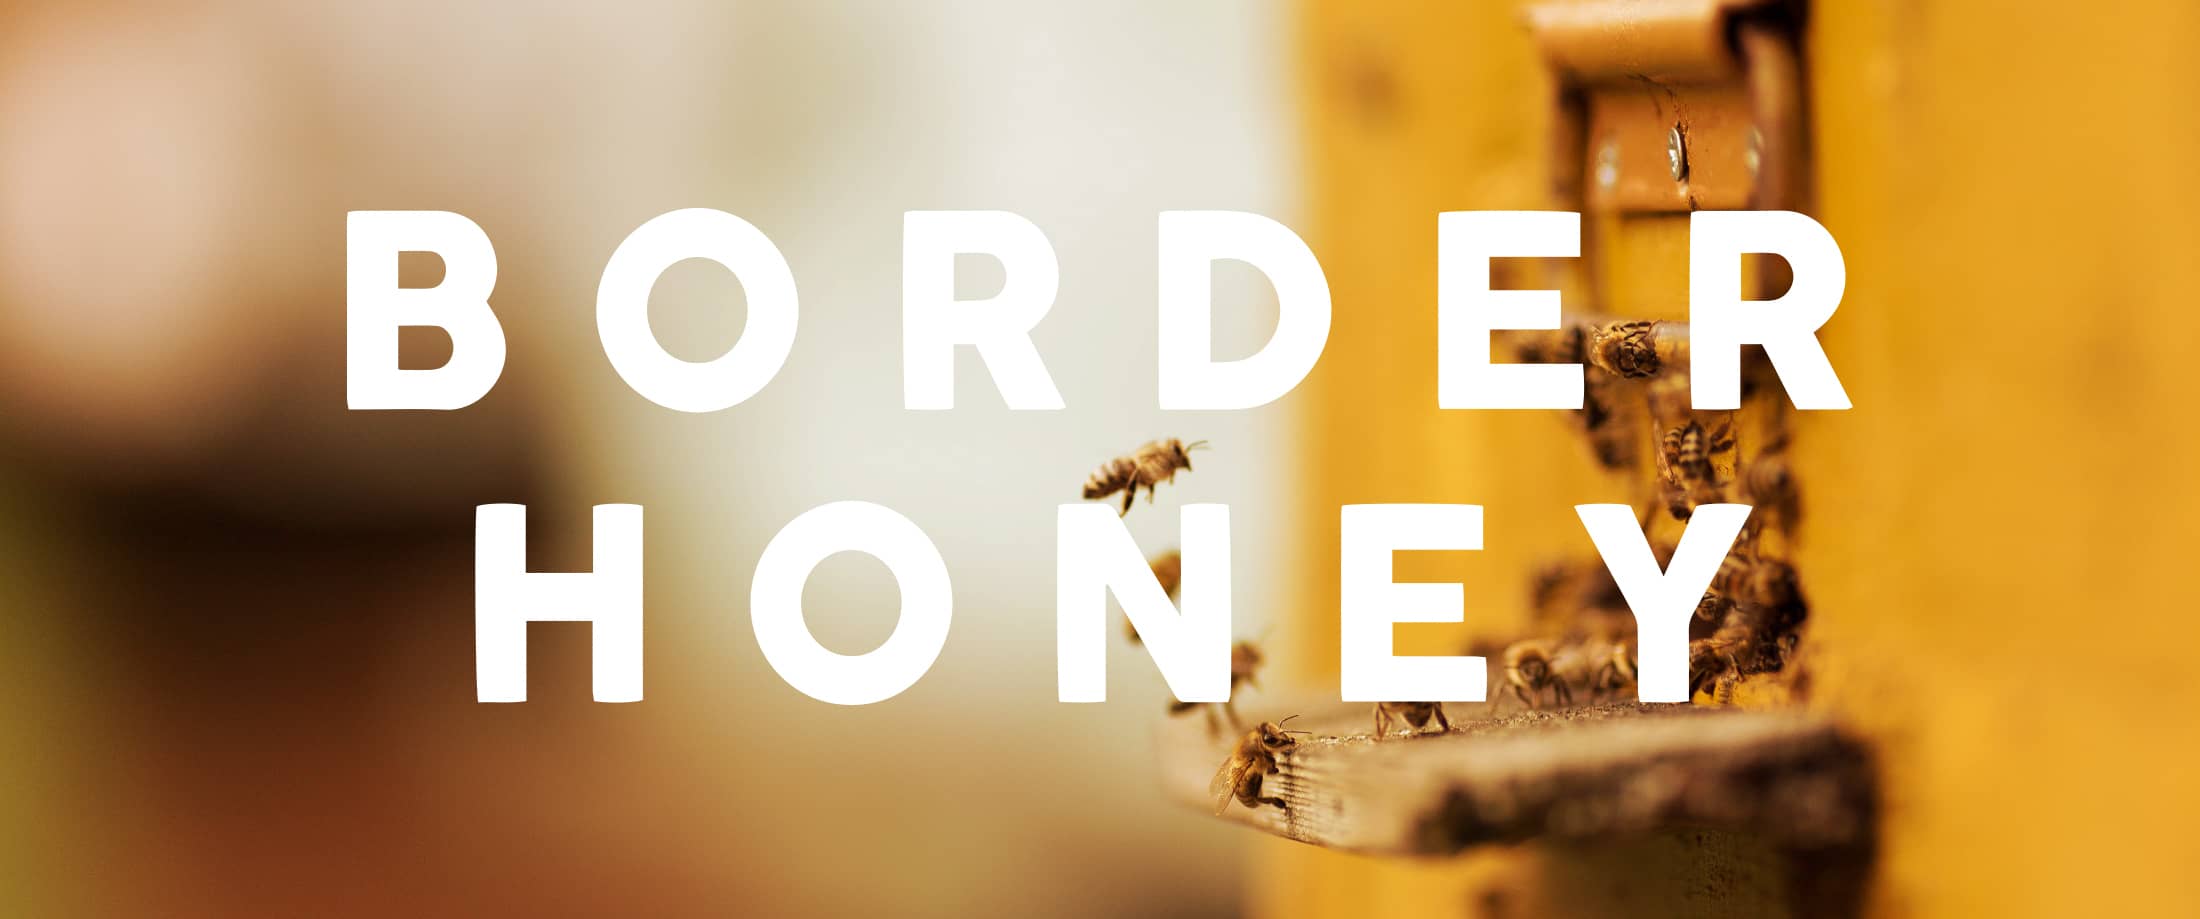 Read our Eat Marketing case study on Border Honey.